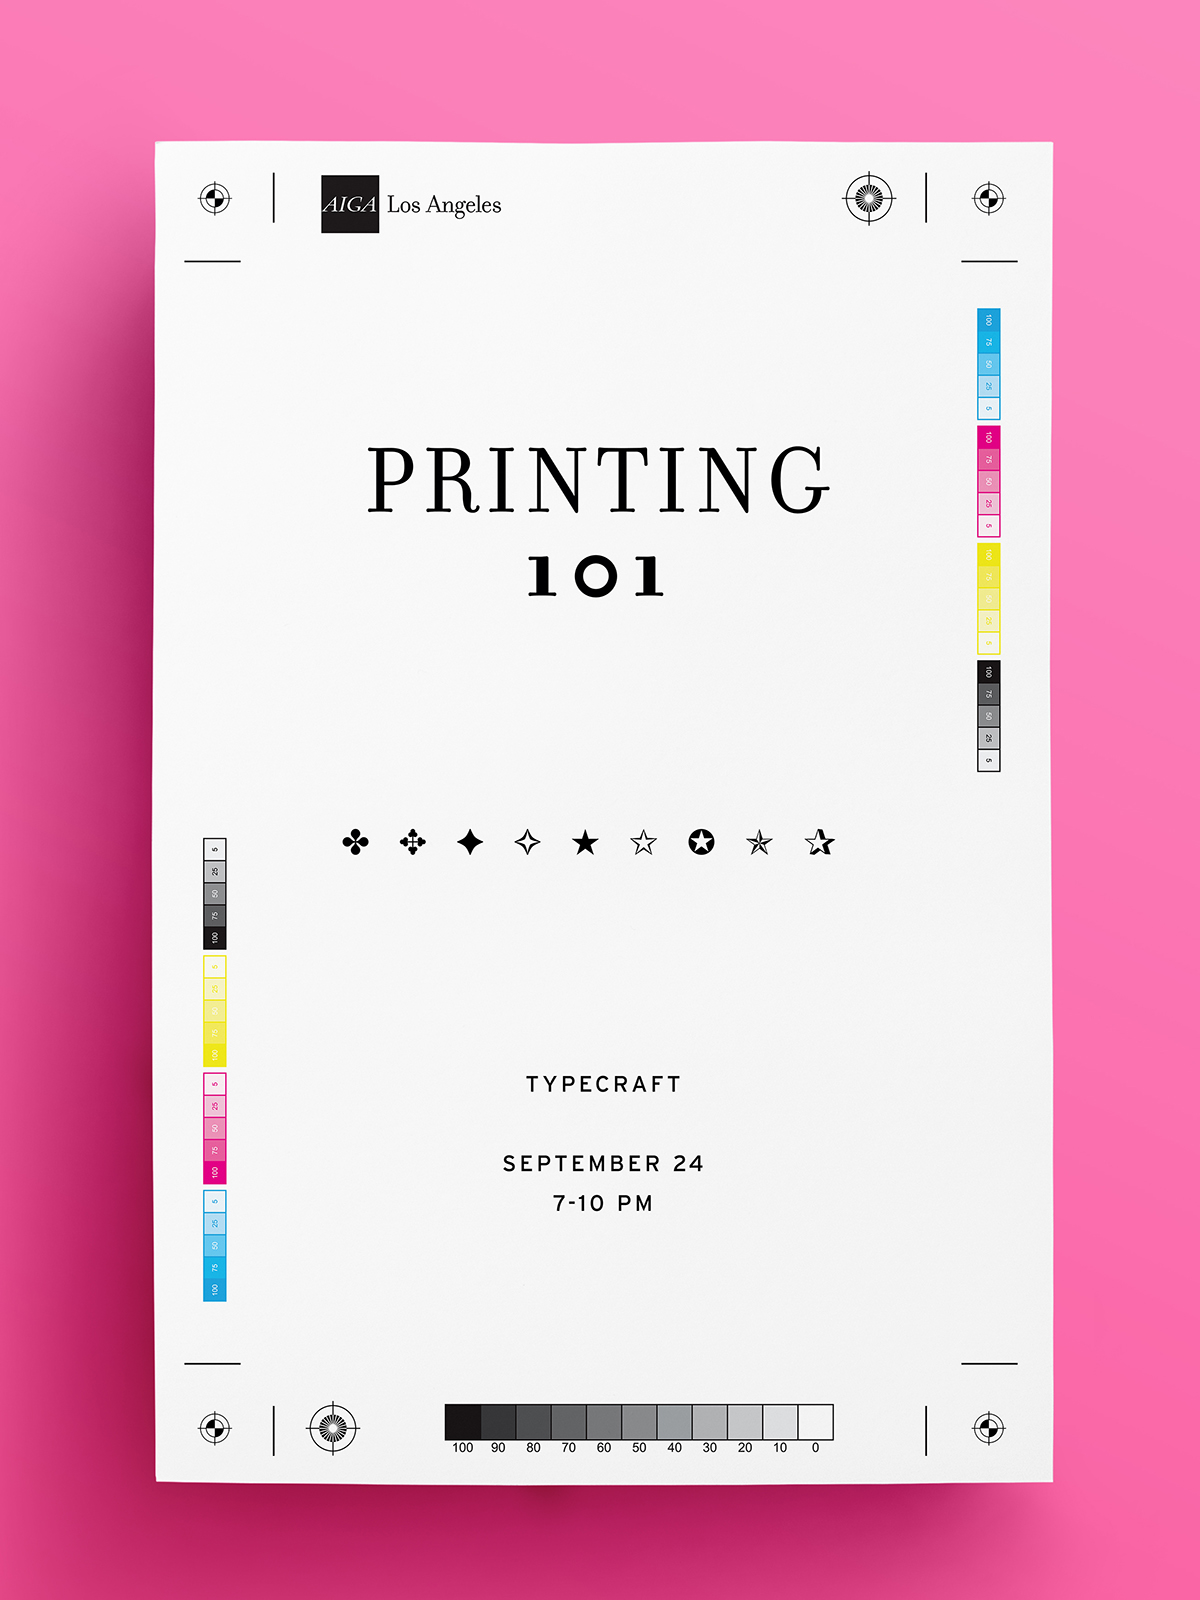 Printing 101 at Typecraft